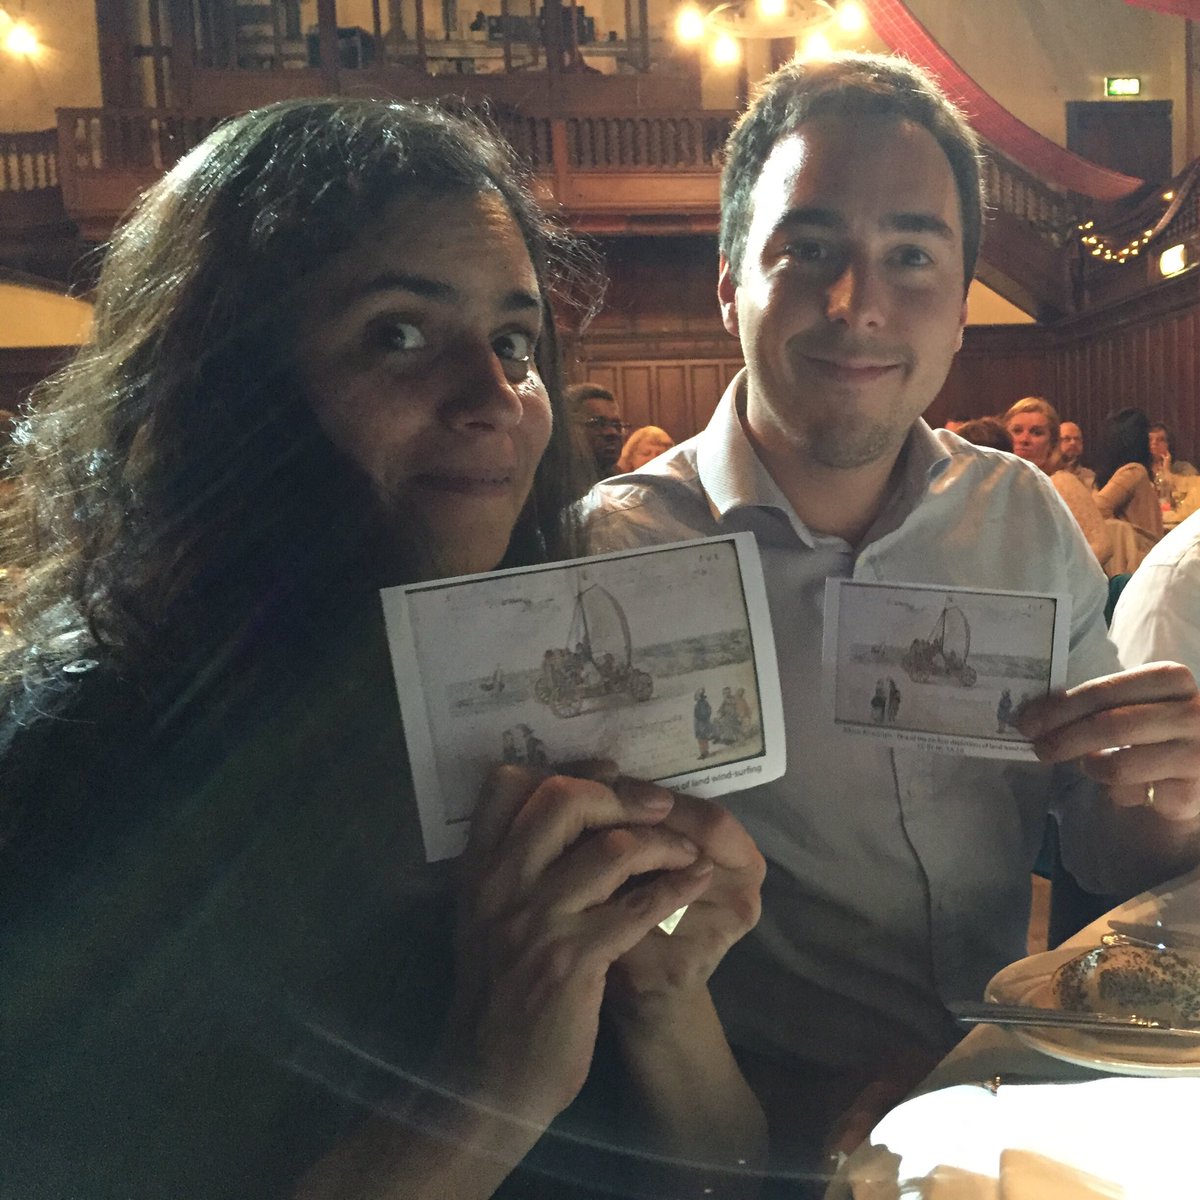 Amazing company (& matching cards) at #oer16 dinner - thanks @savasavasava & @dan_meyer11! https://t.co/0PMFD9rSif